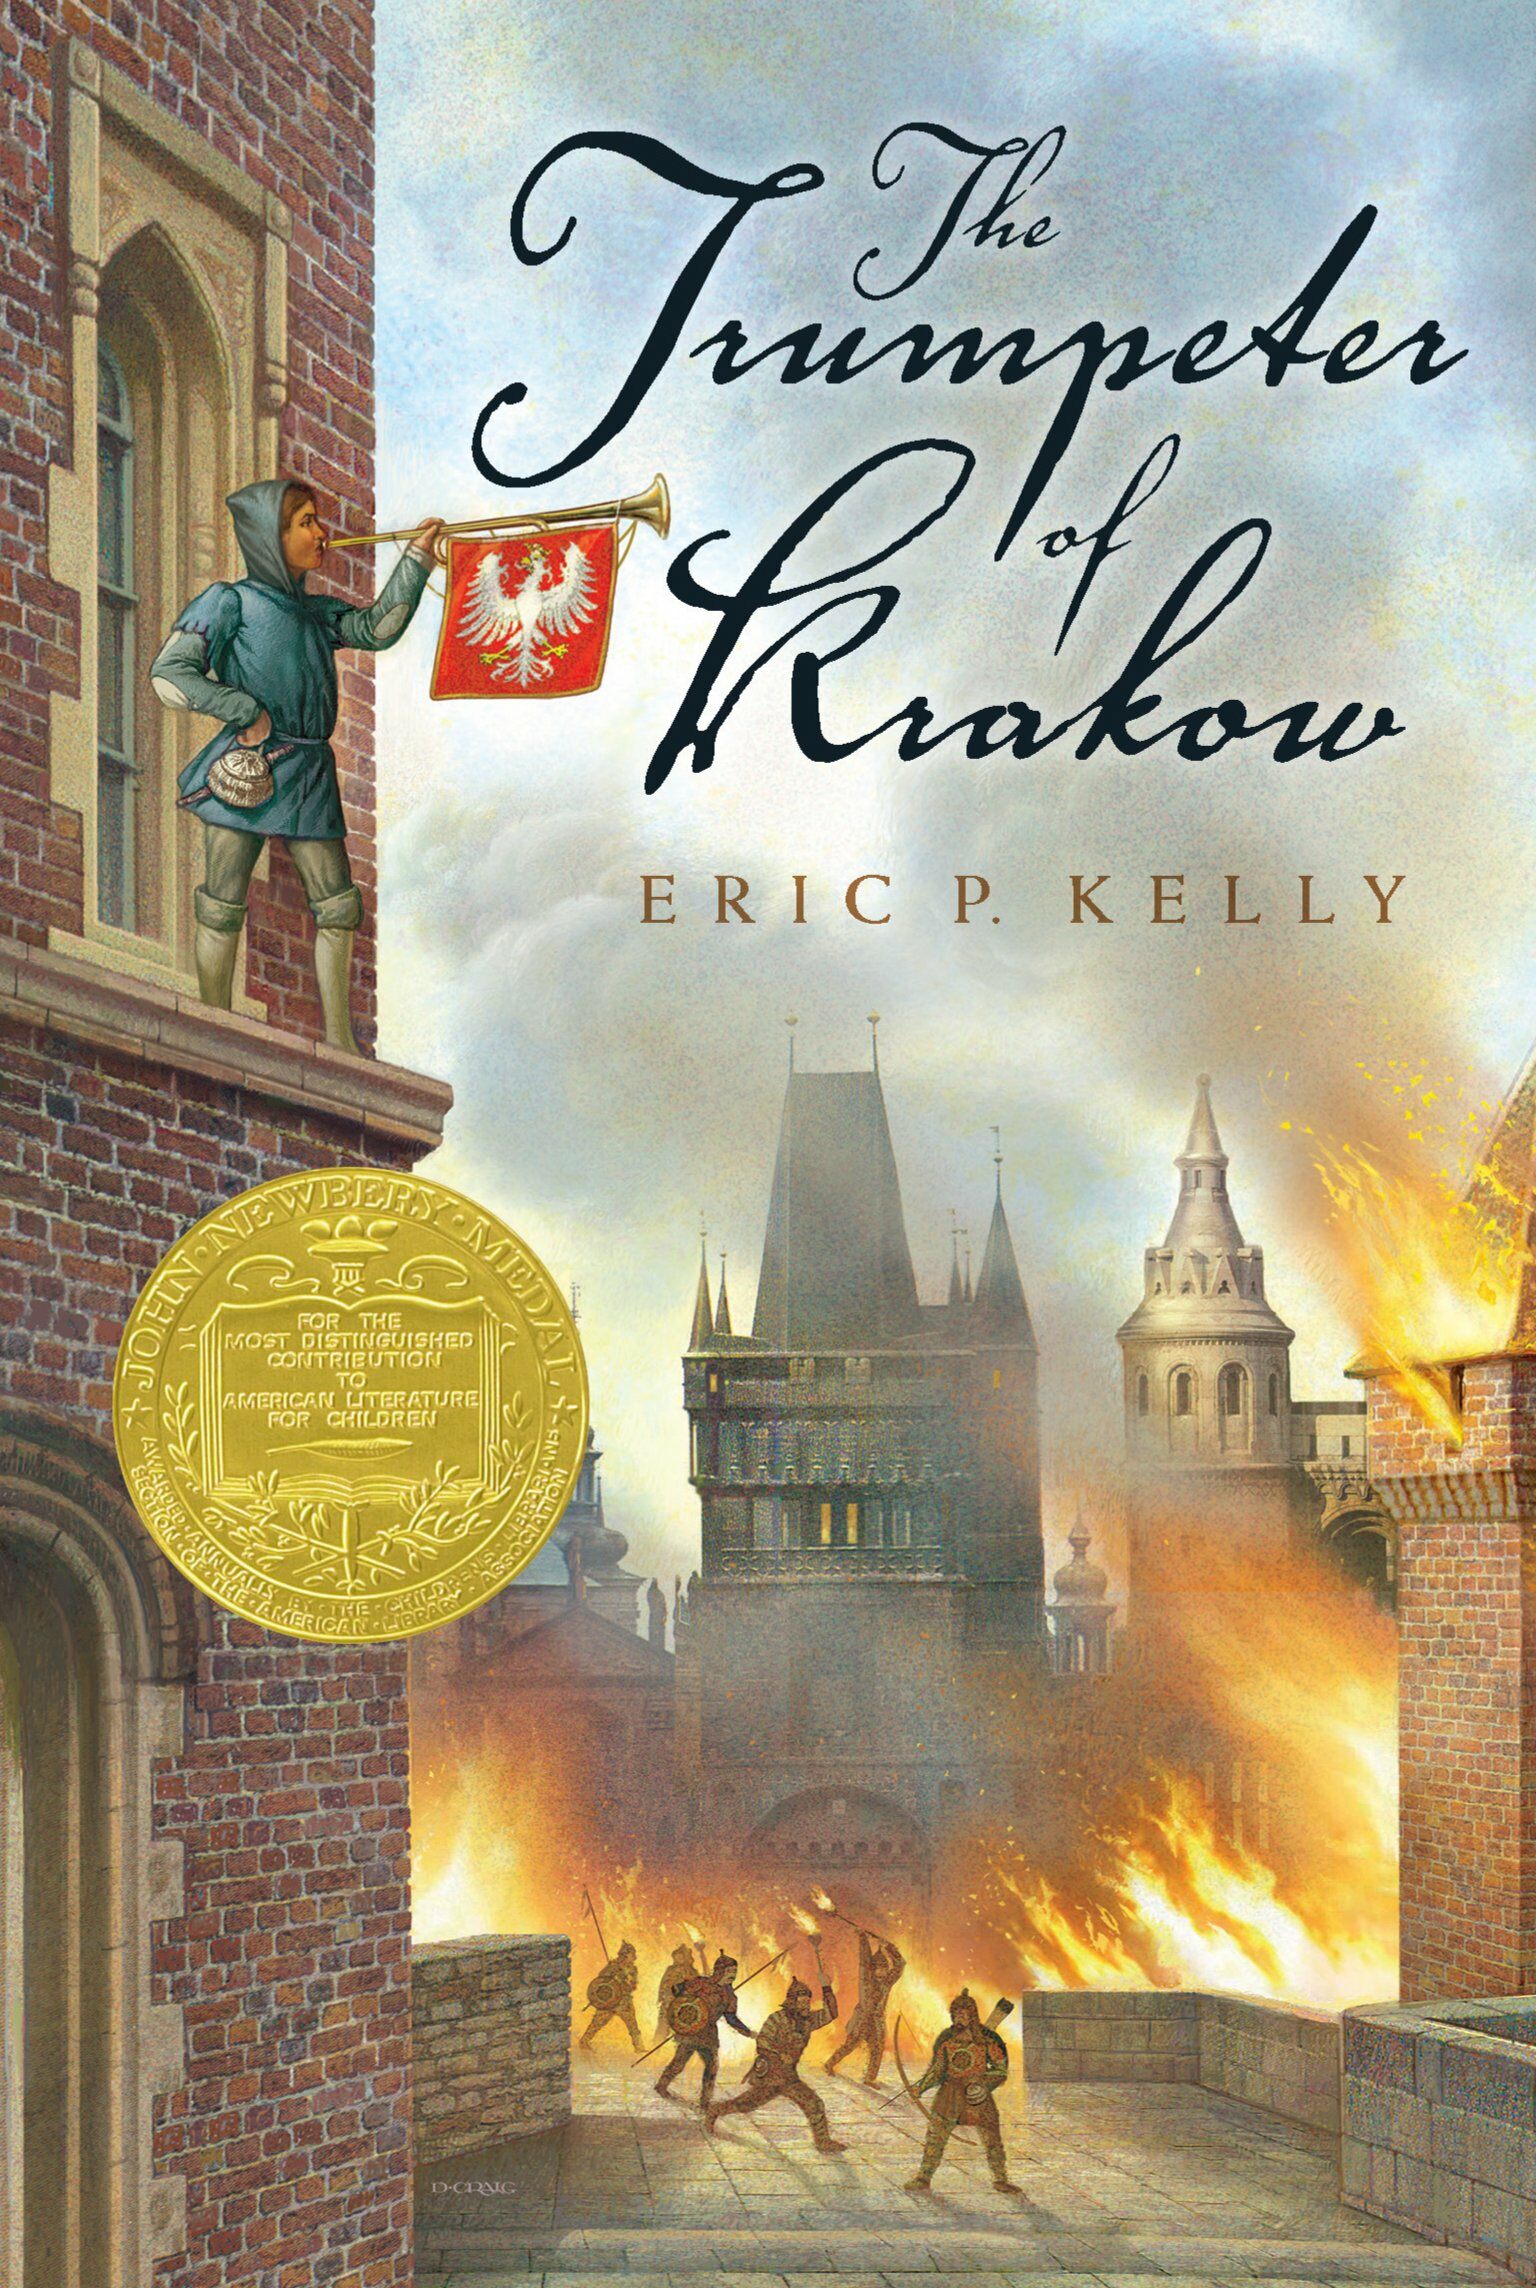 The Trumpeter of Krakow (Paperback)